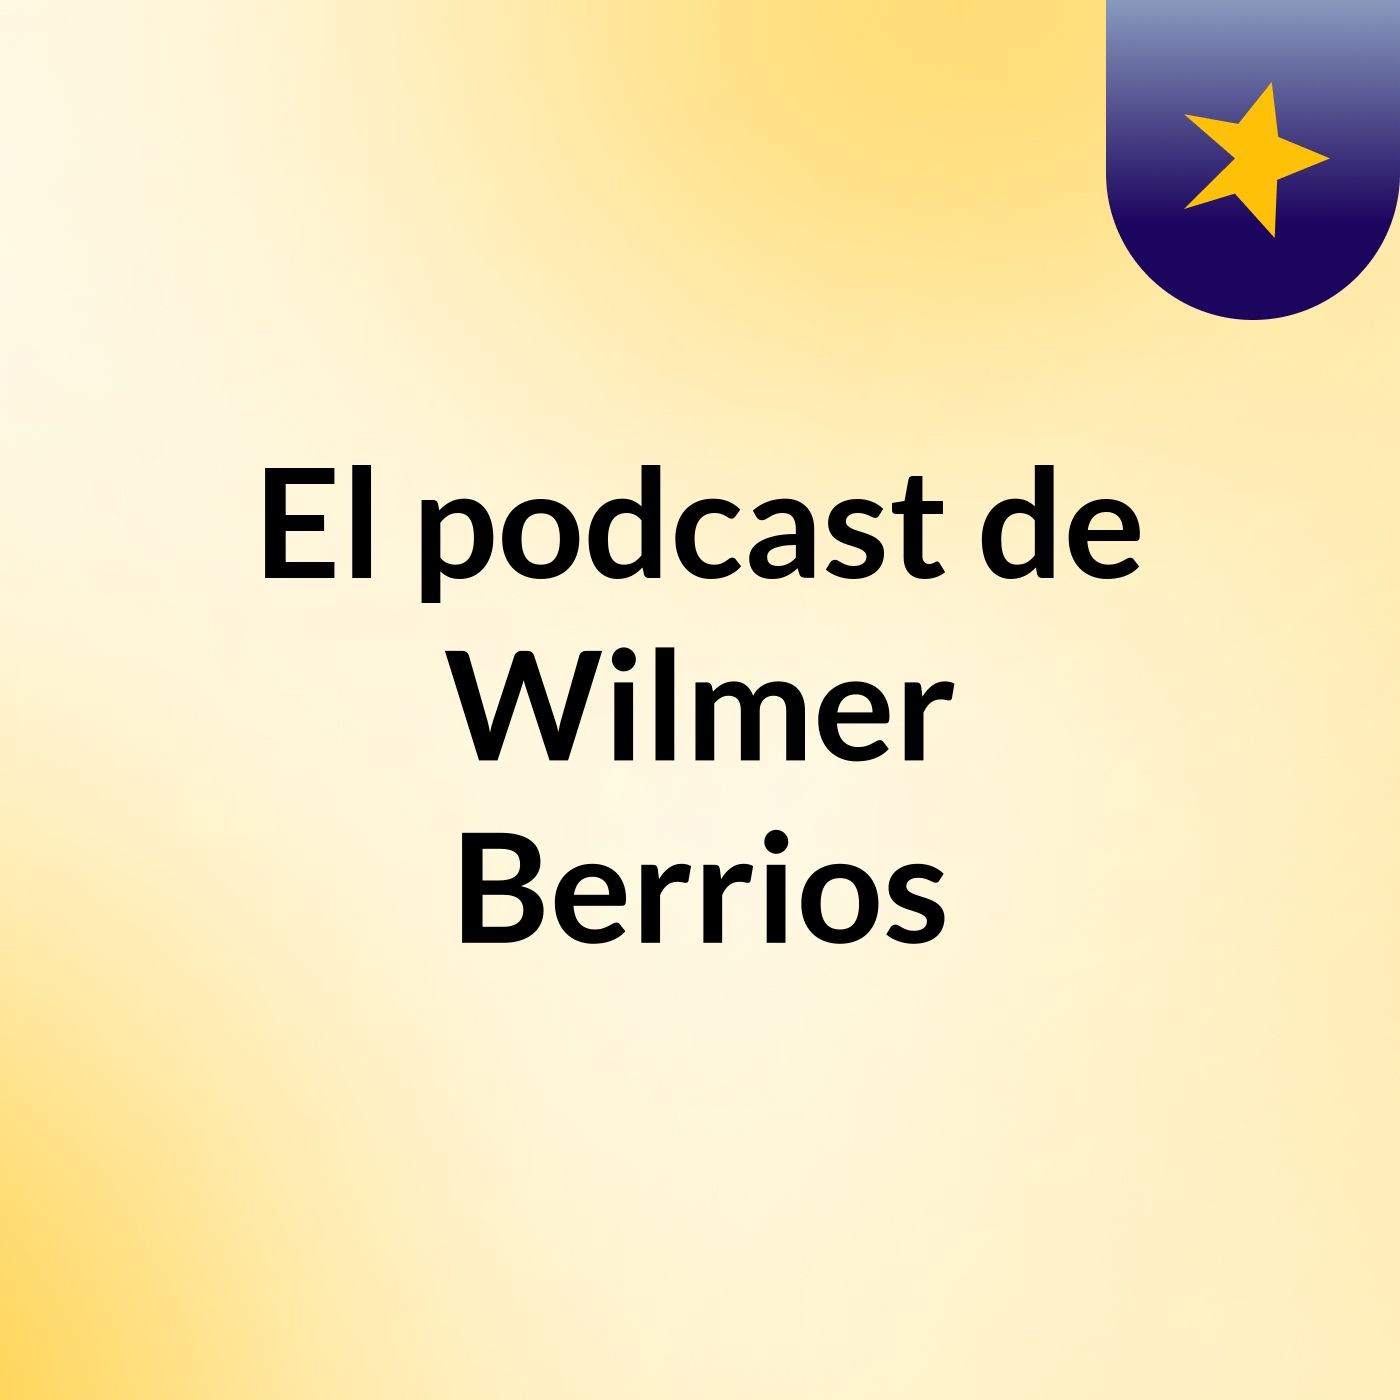 El podcast de Wilmer Berrios